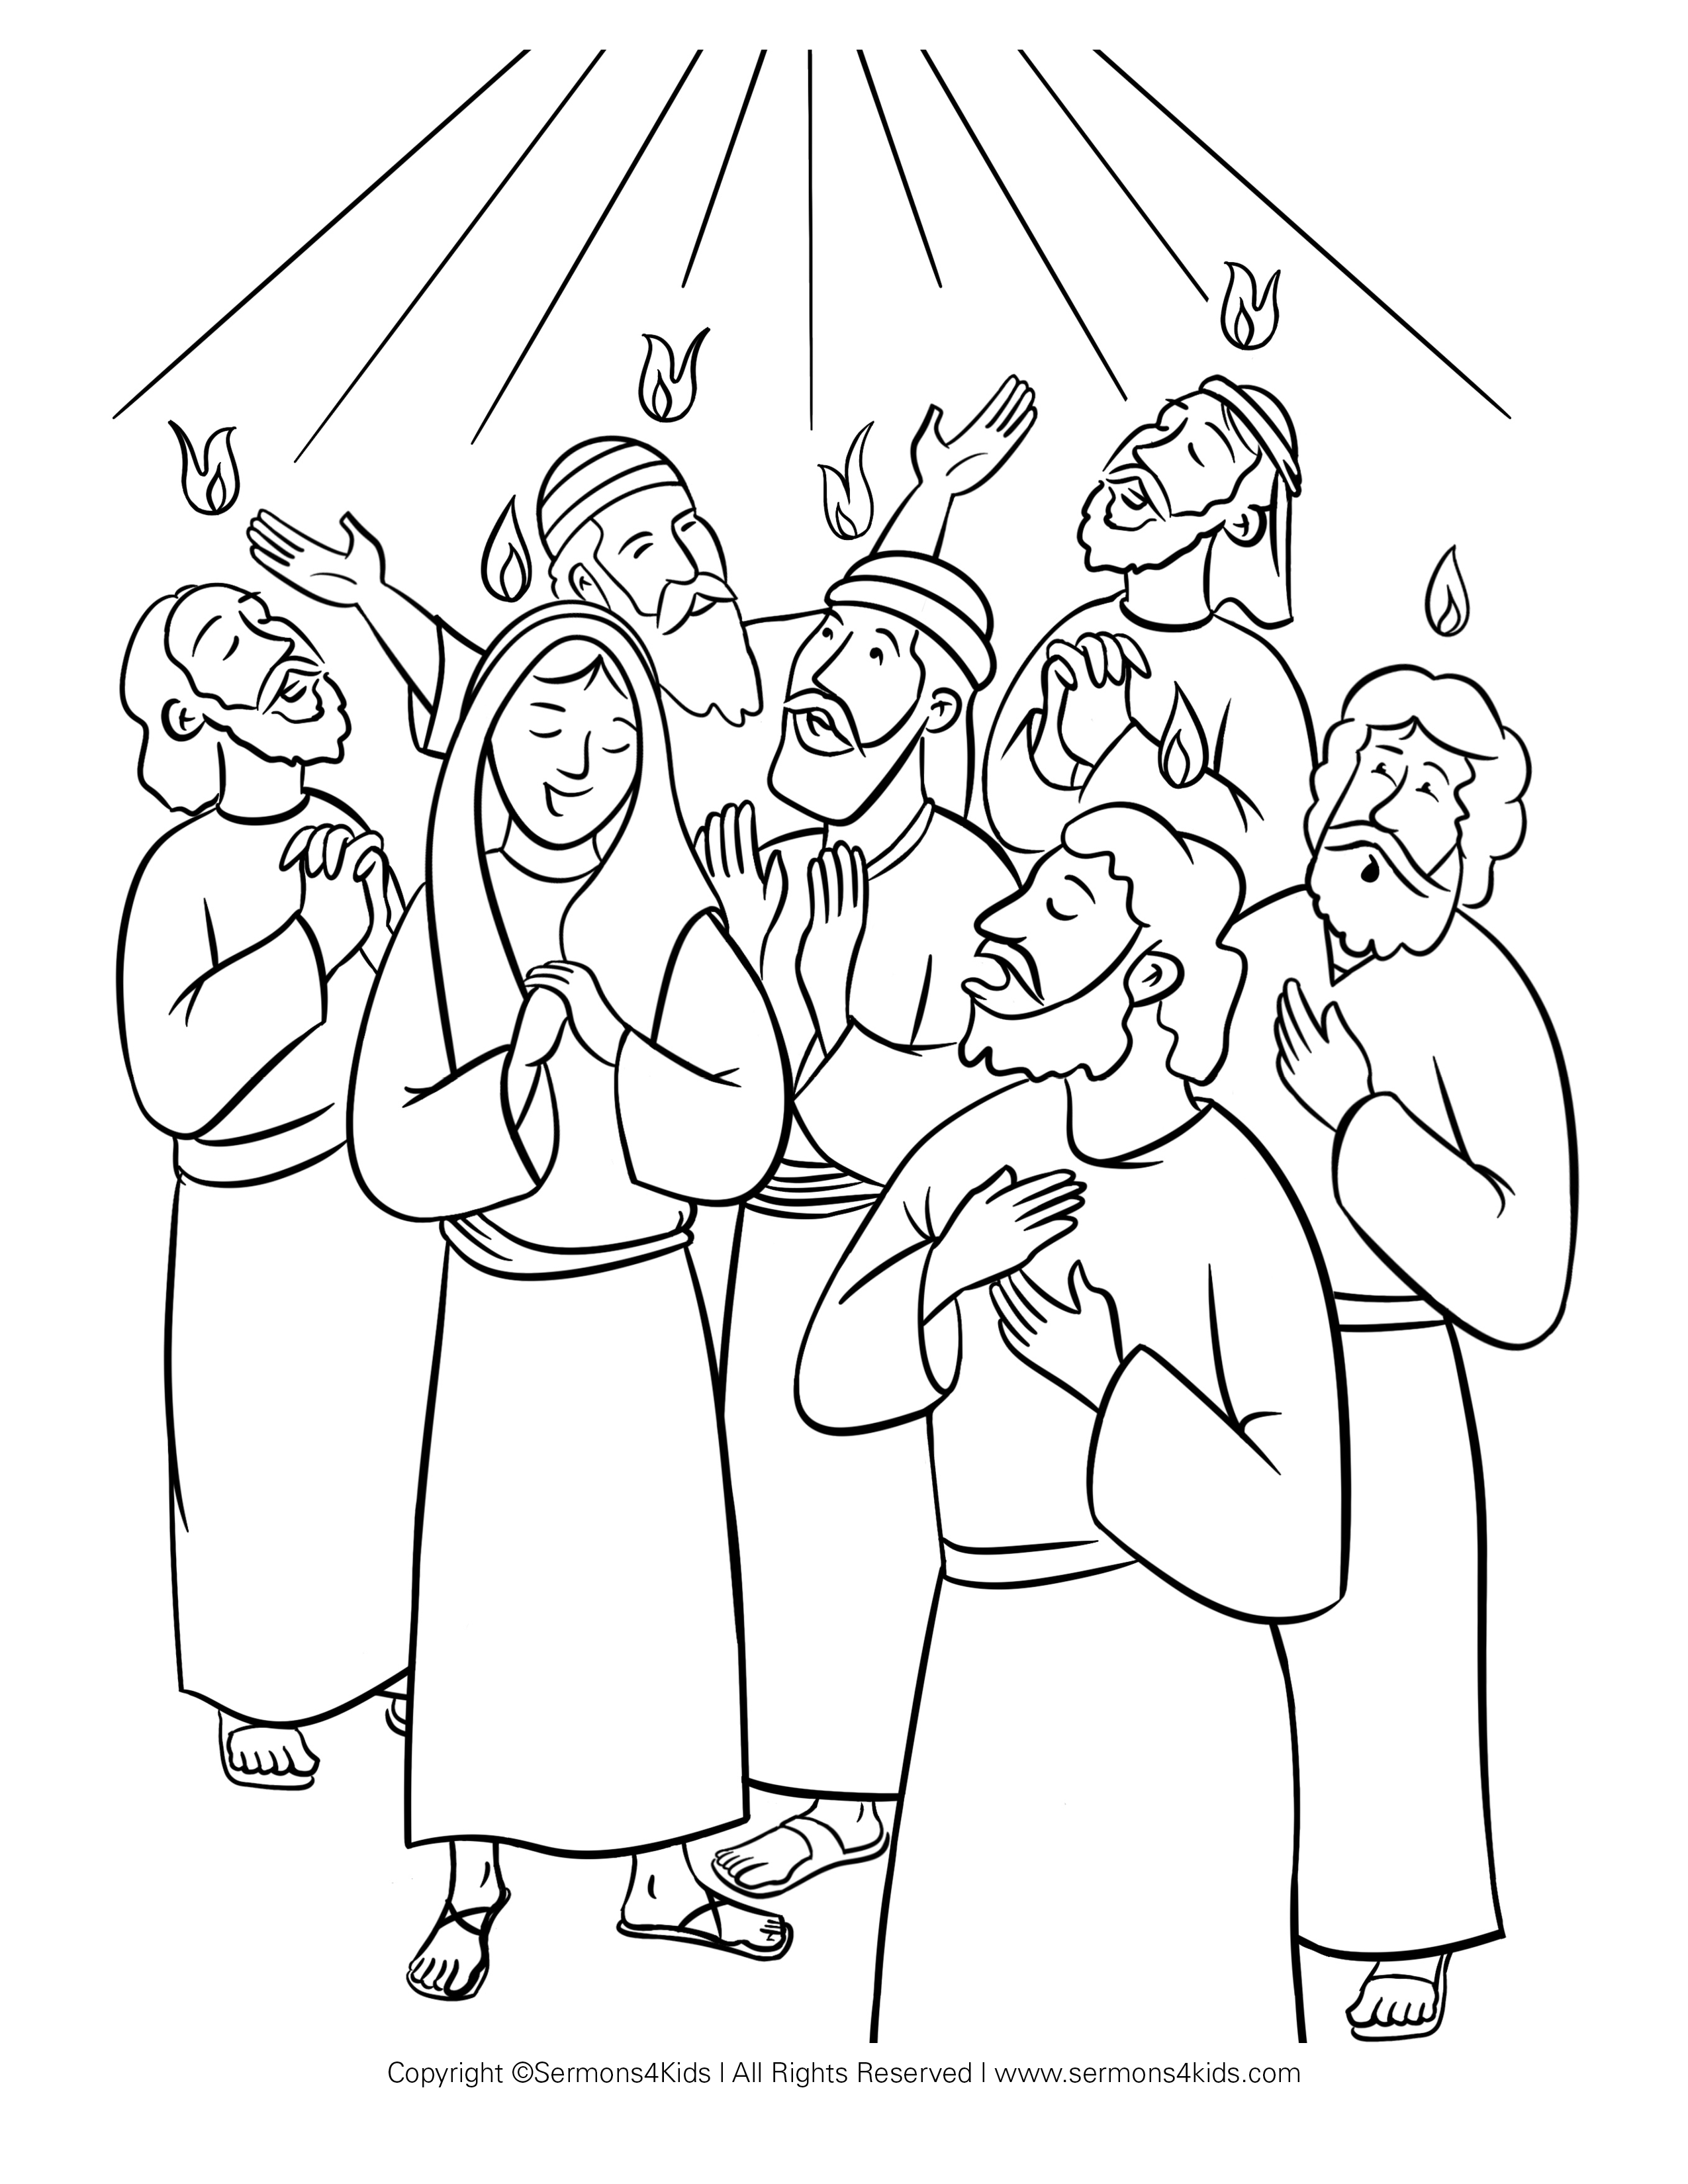 Pentecost childrens sermons from